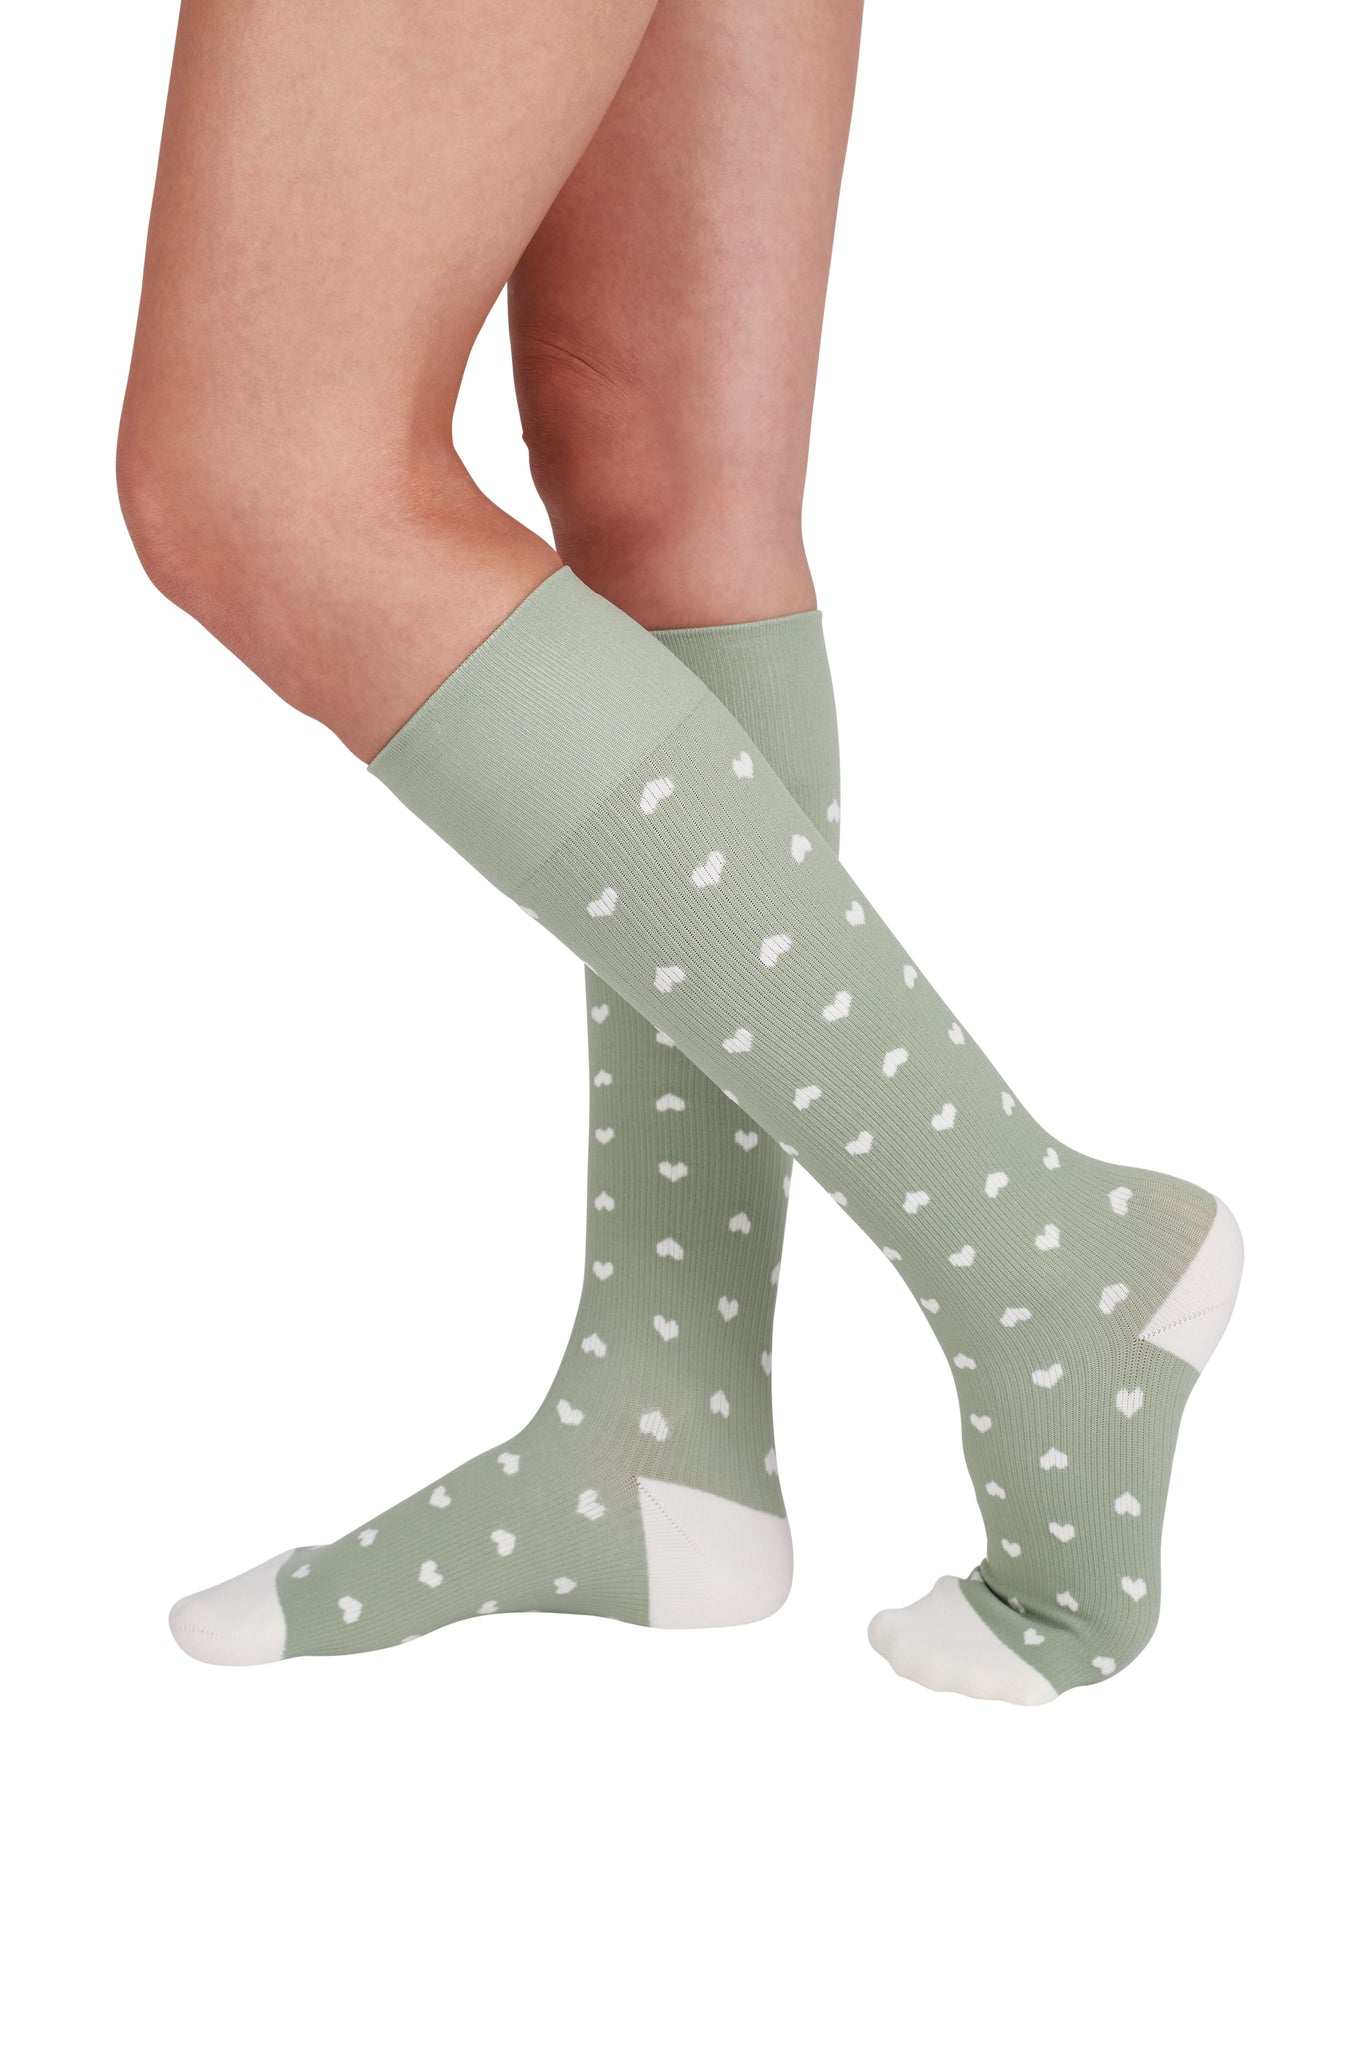 REJUVA Heart Knee-high Compression Socks | Compression Care